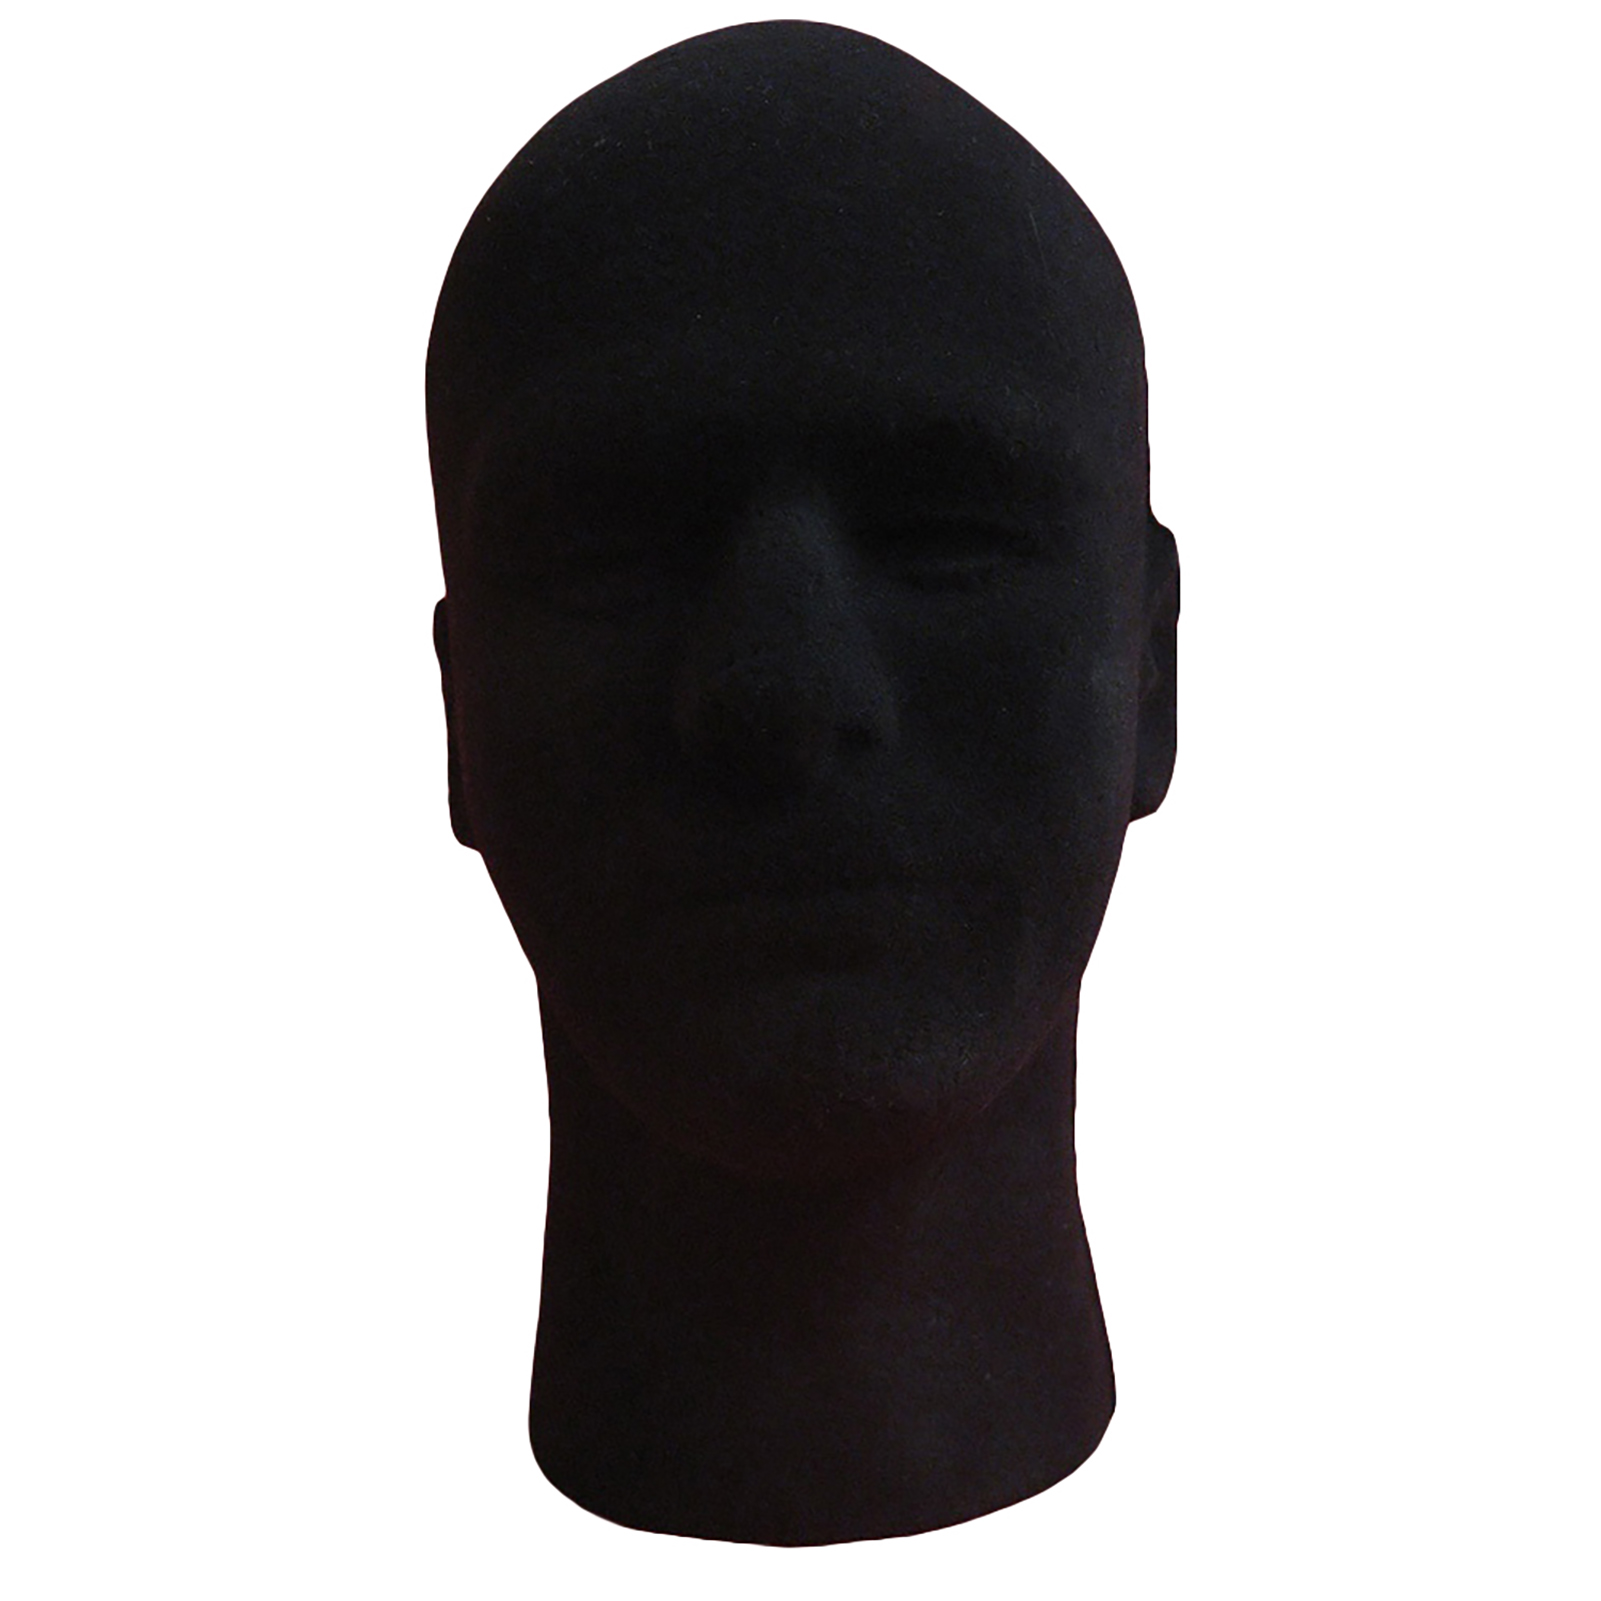 Sunjoy Tech Male Wigs Display Mannequin Head Stand Model Headsets Mount Styrofoam Foam Flocking Black - image 2 of 8